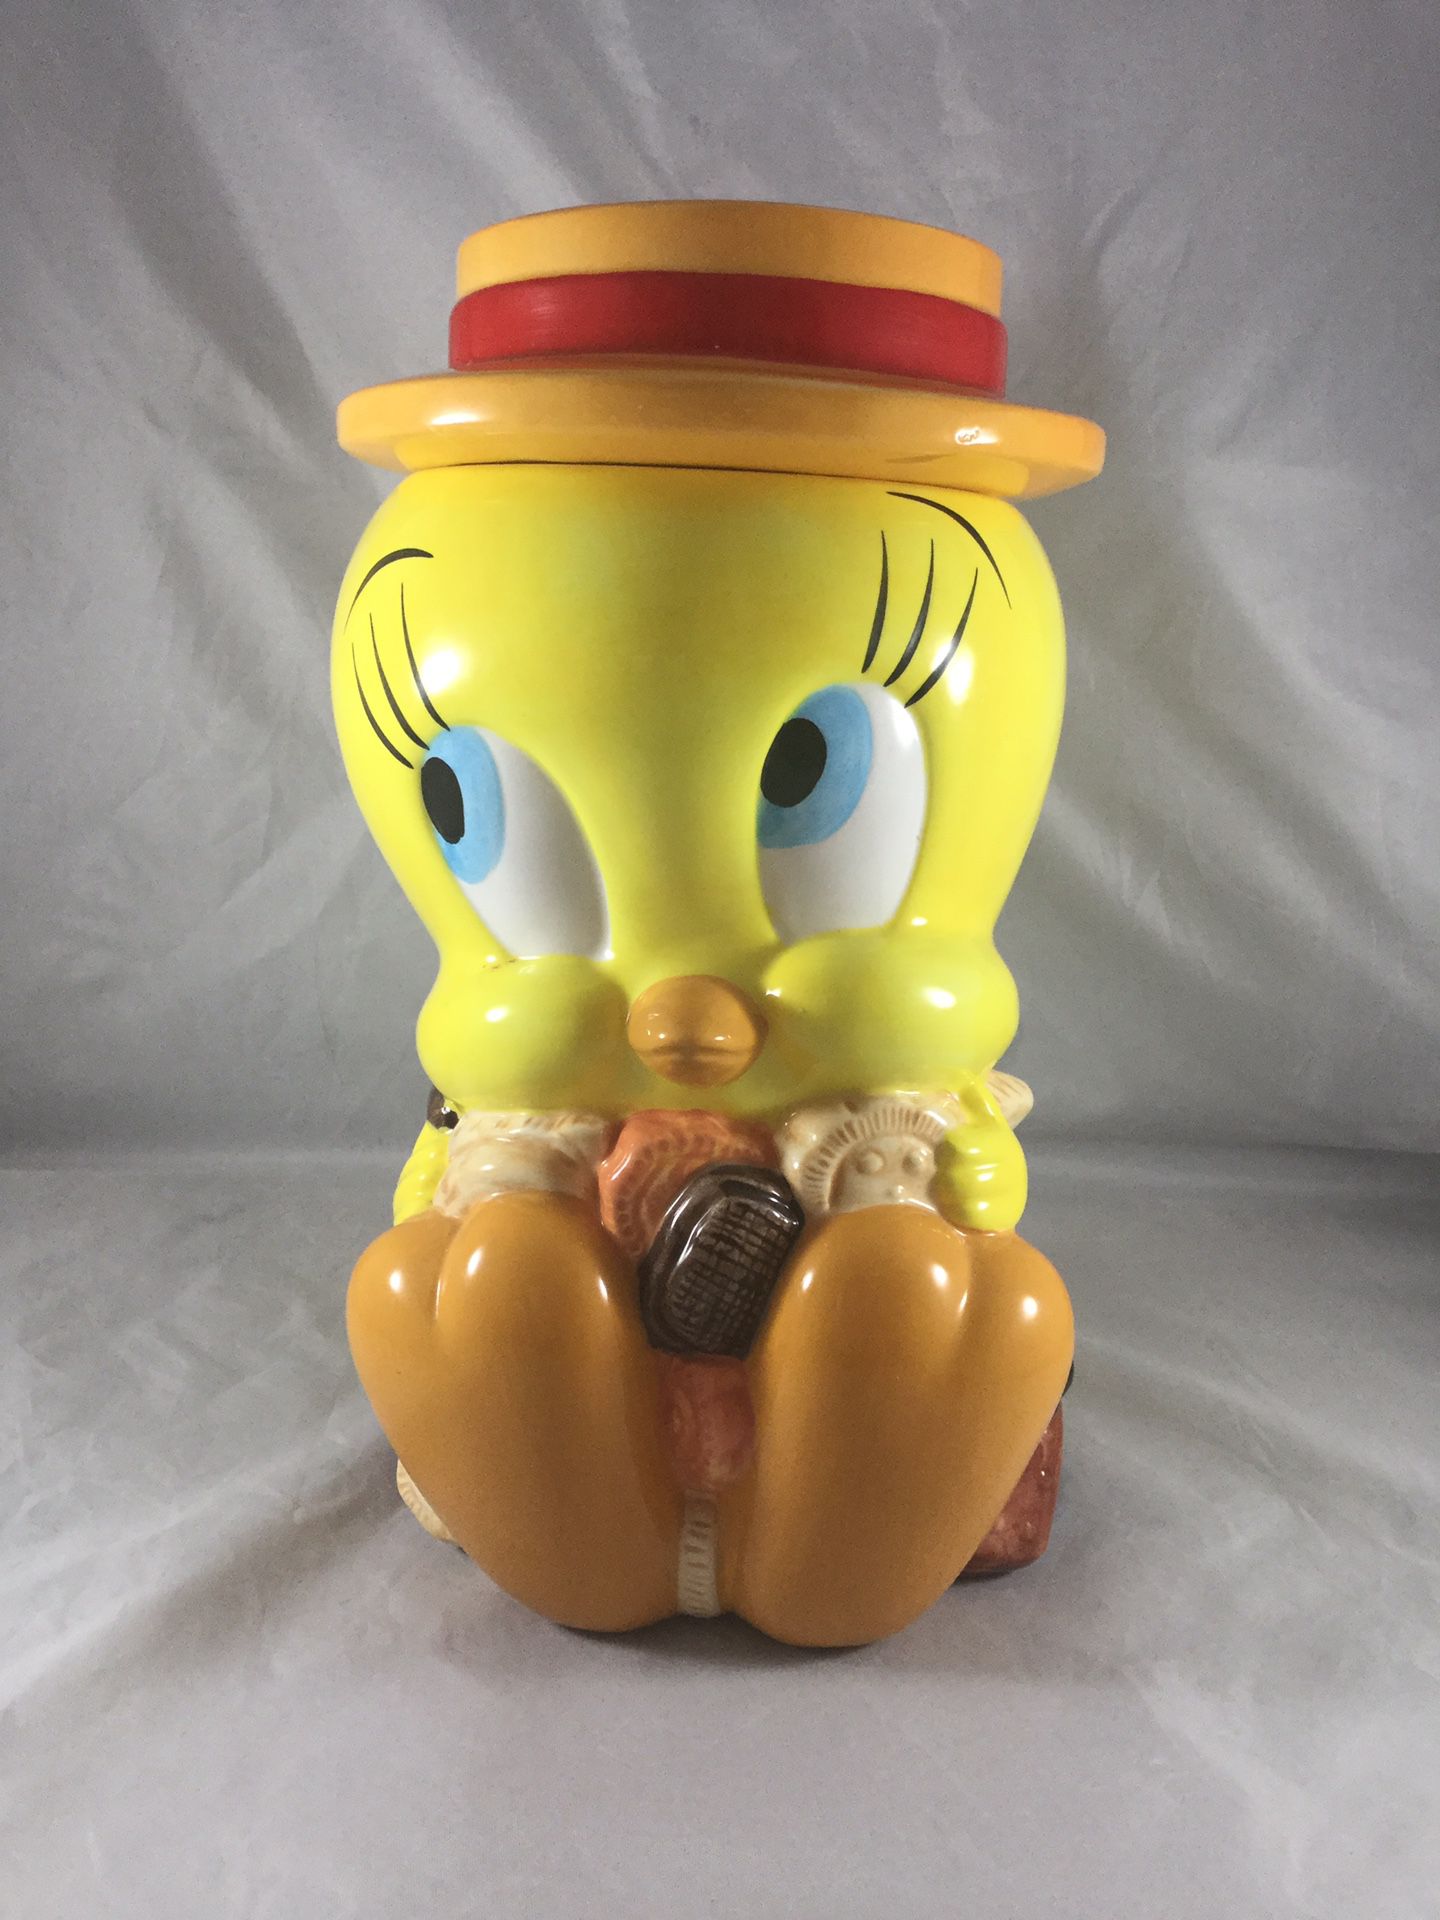 Tweety Bird Cookie Jar from 1997 Looney Tunes Warner Brother by Gibson